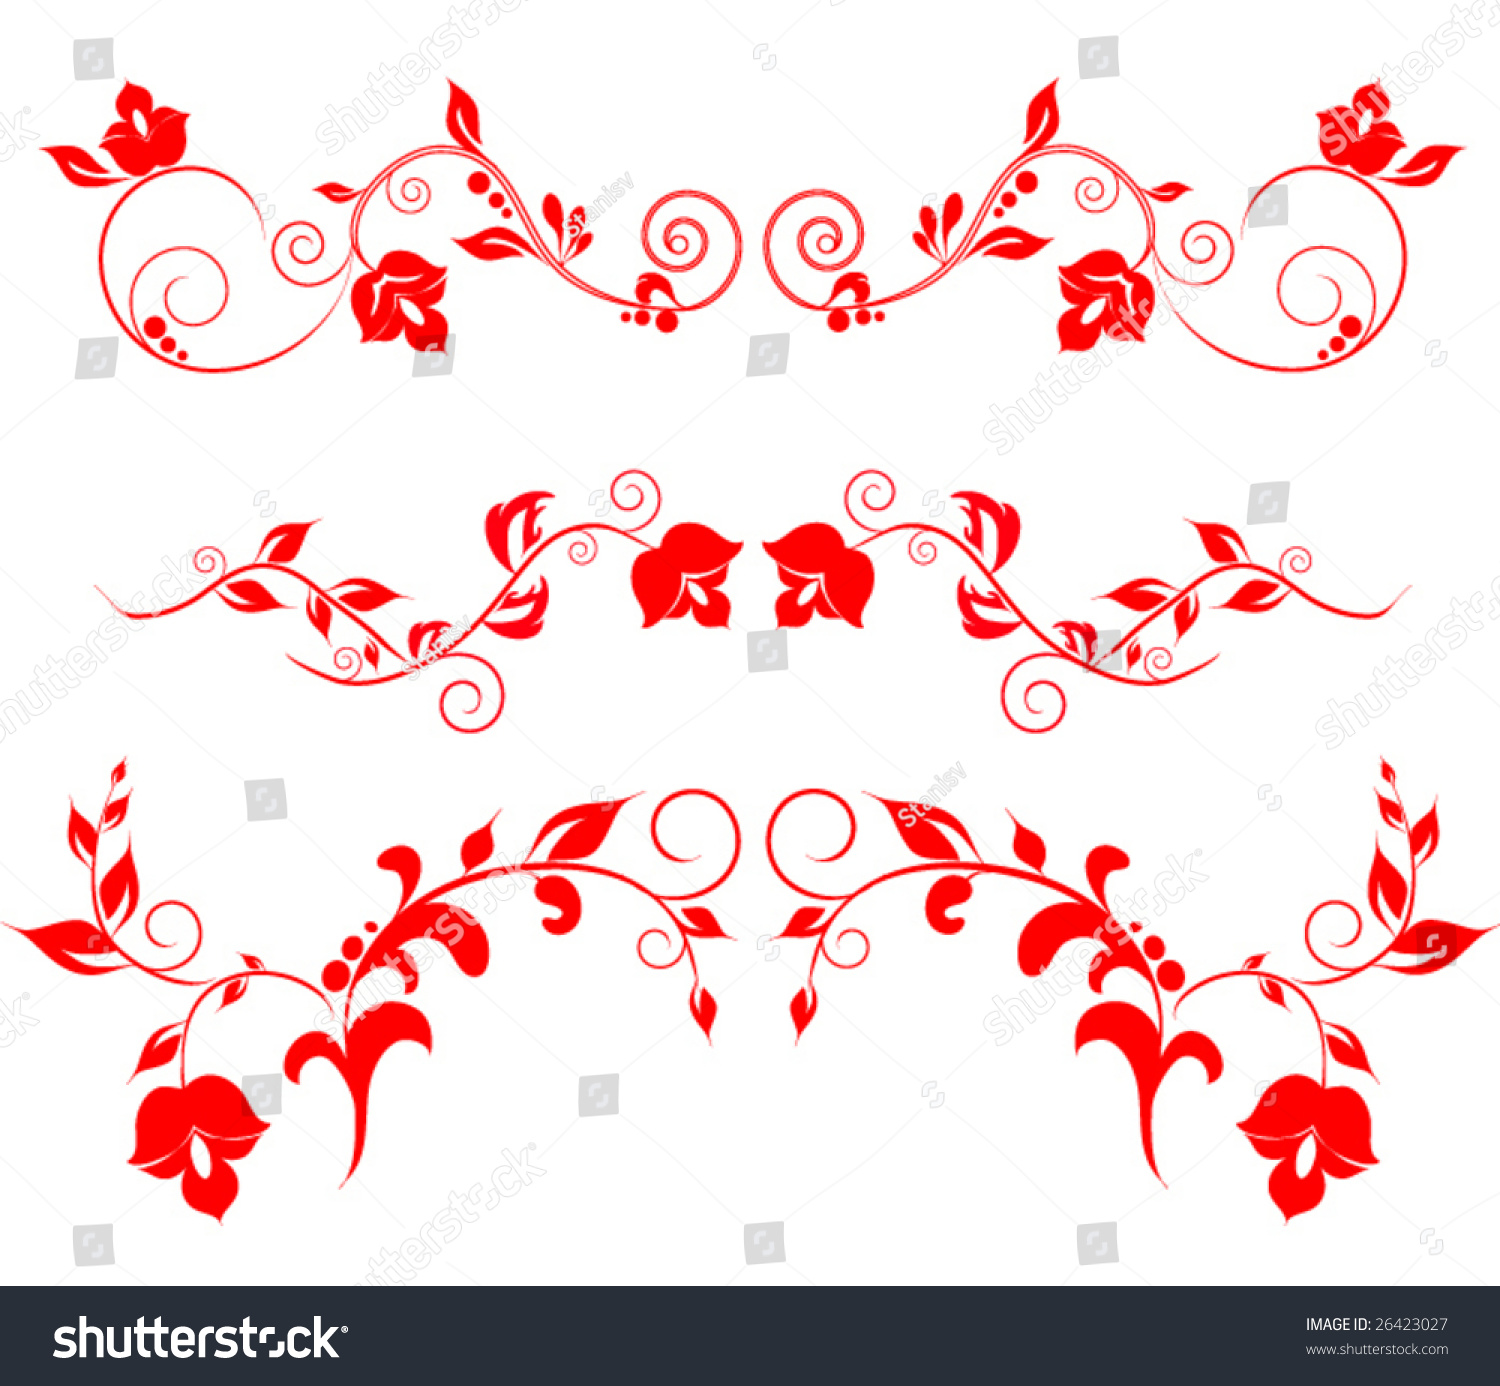 Vector Floral Design Elements On White Background - 26423027 : Shutterstock